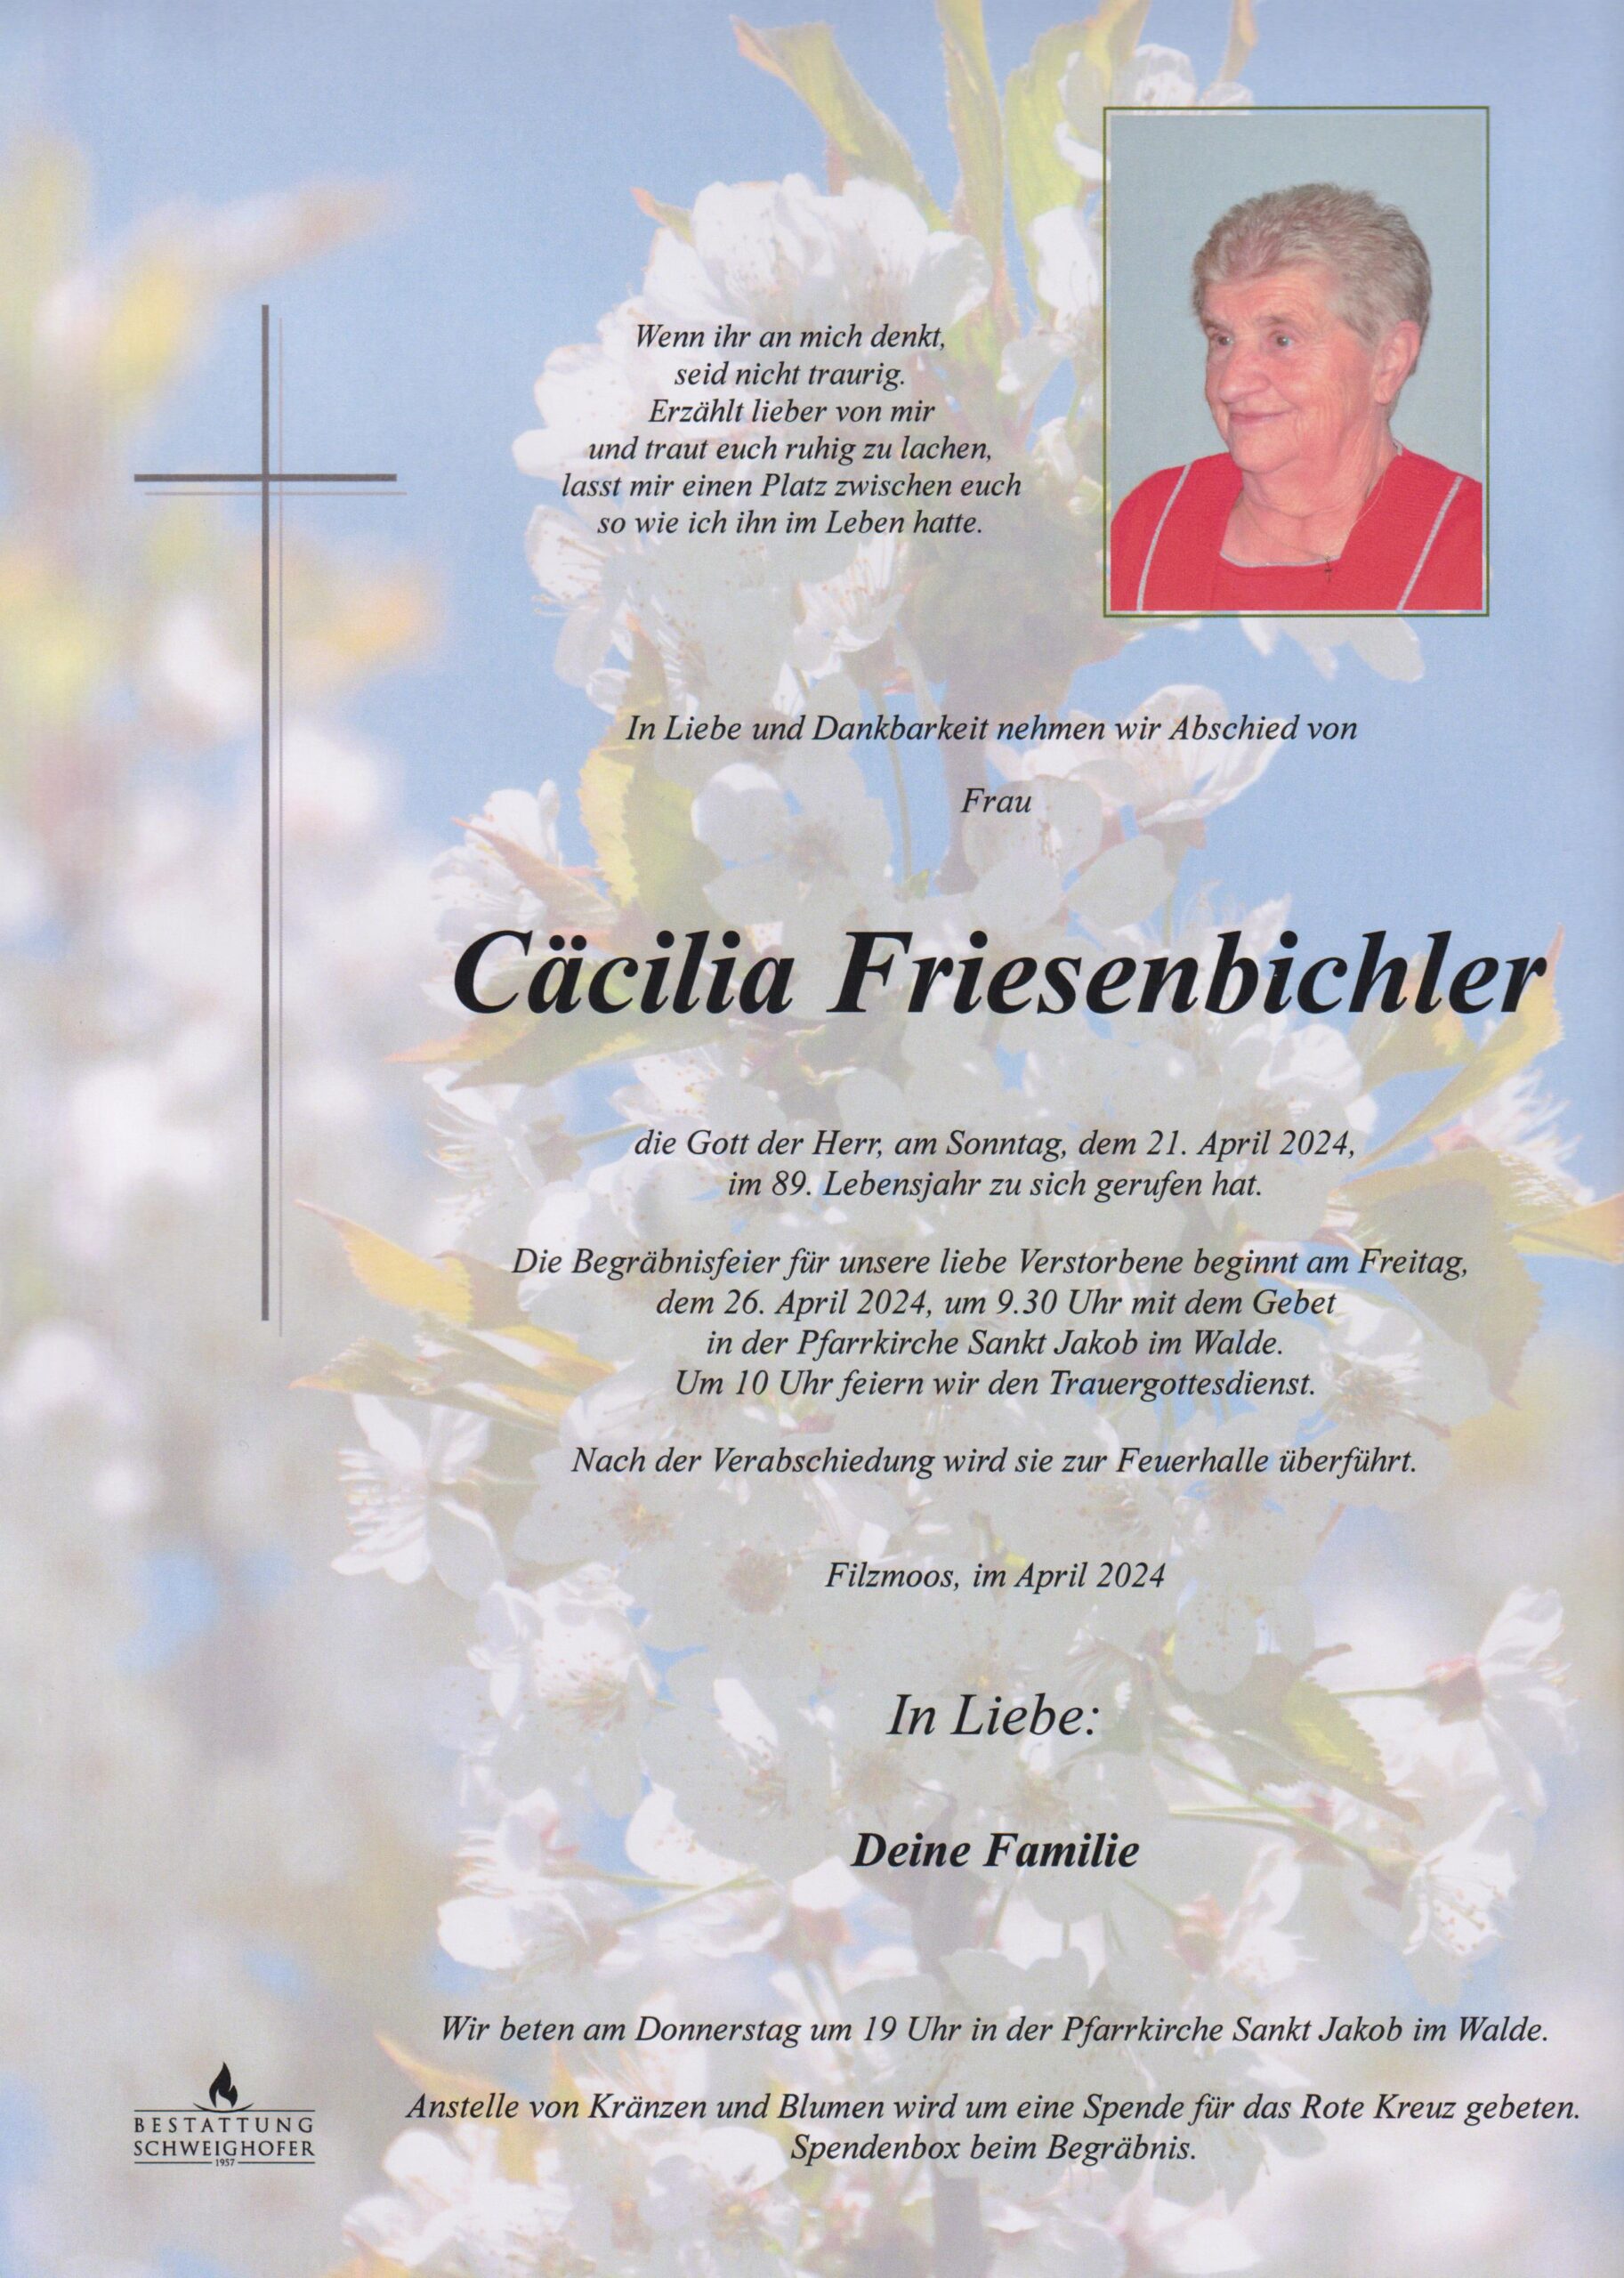 Cäcilia Friesenbichler